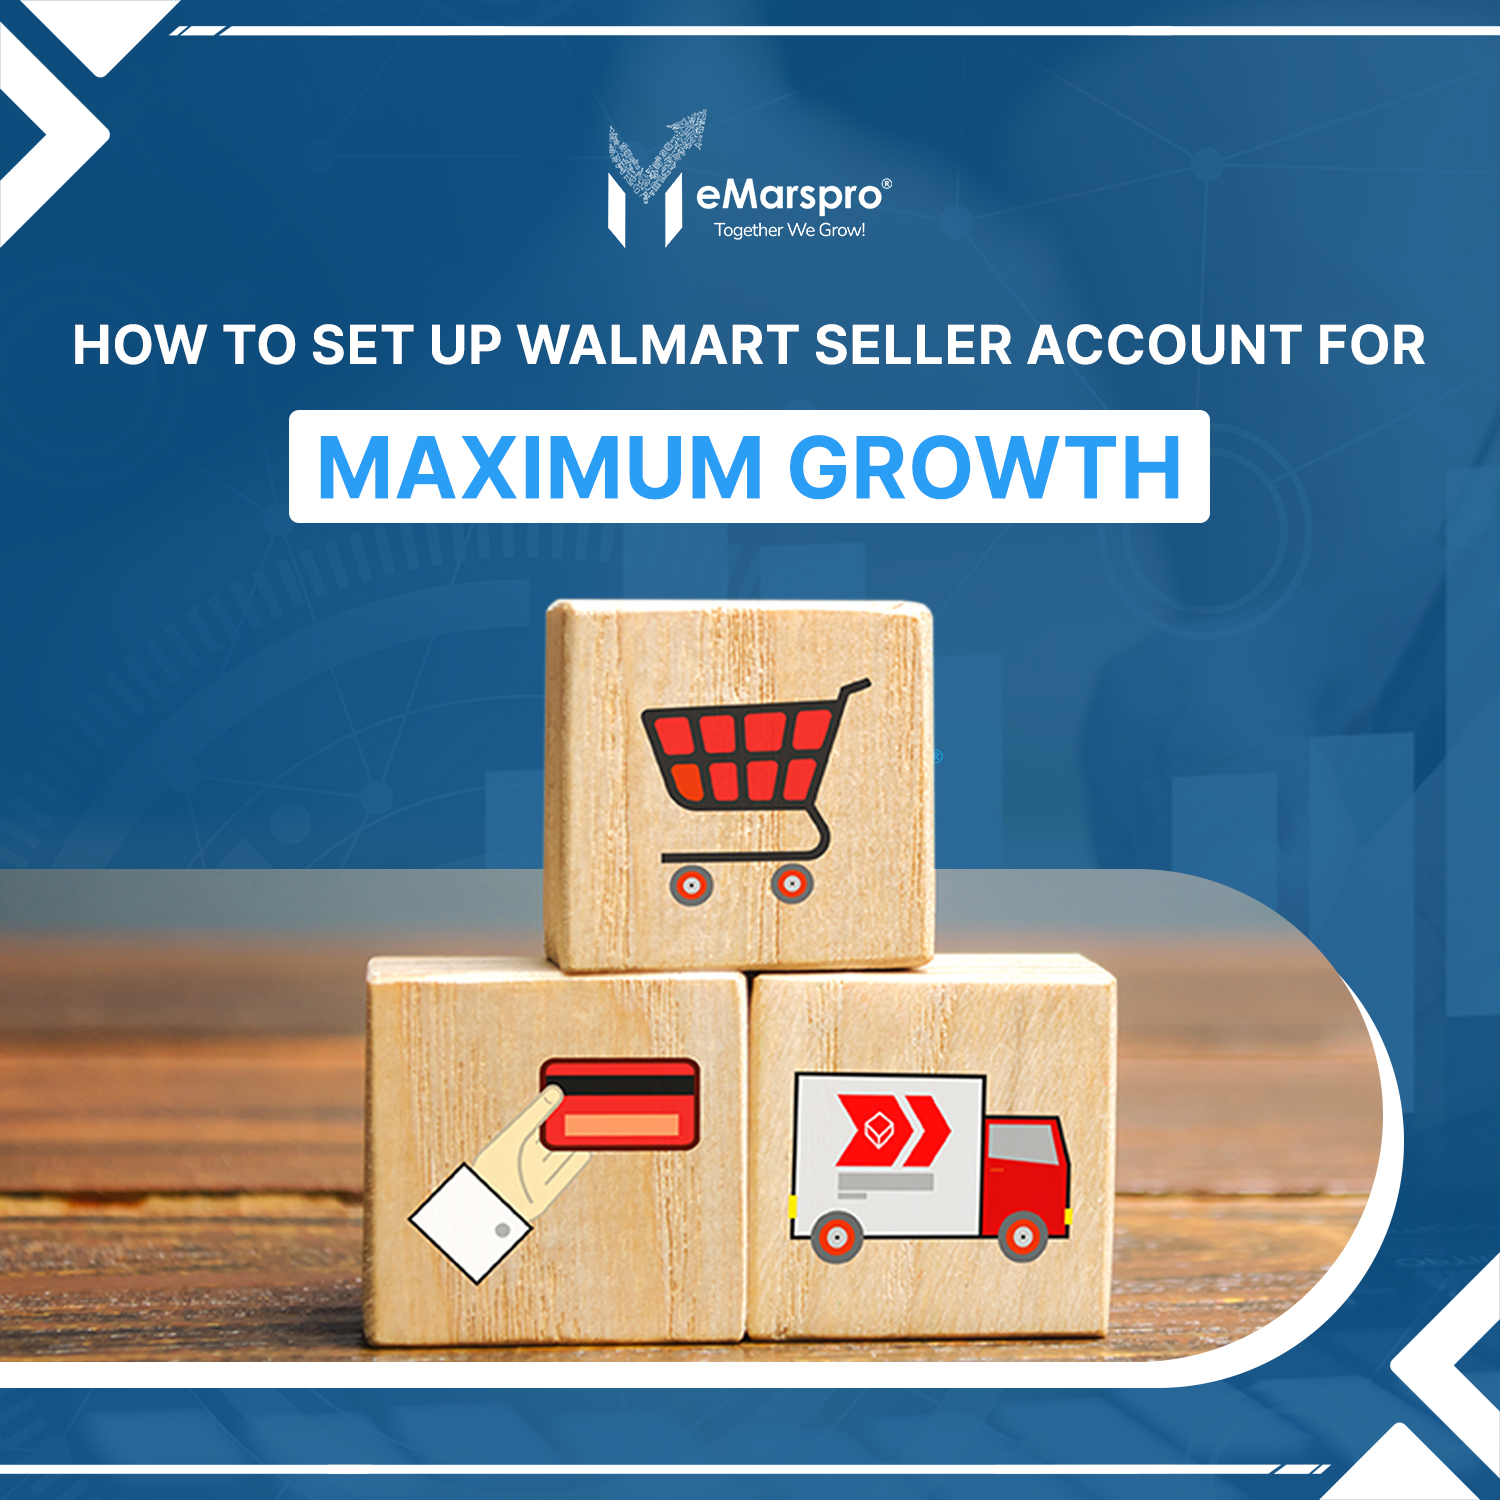 Tips for Walmart Seller Account Setup